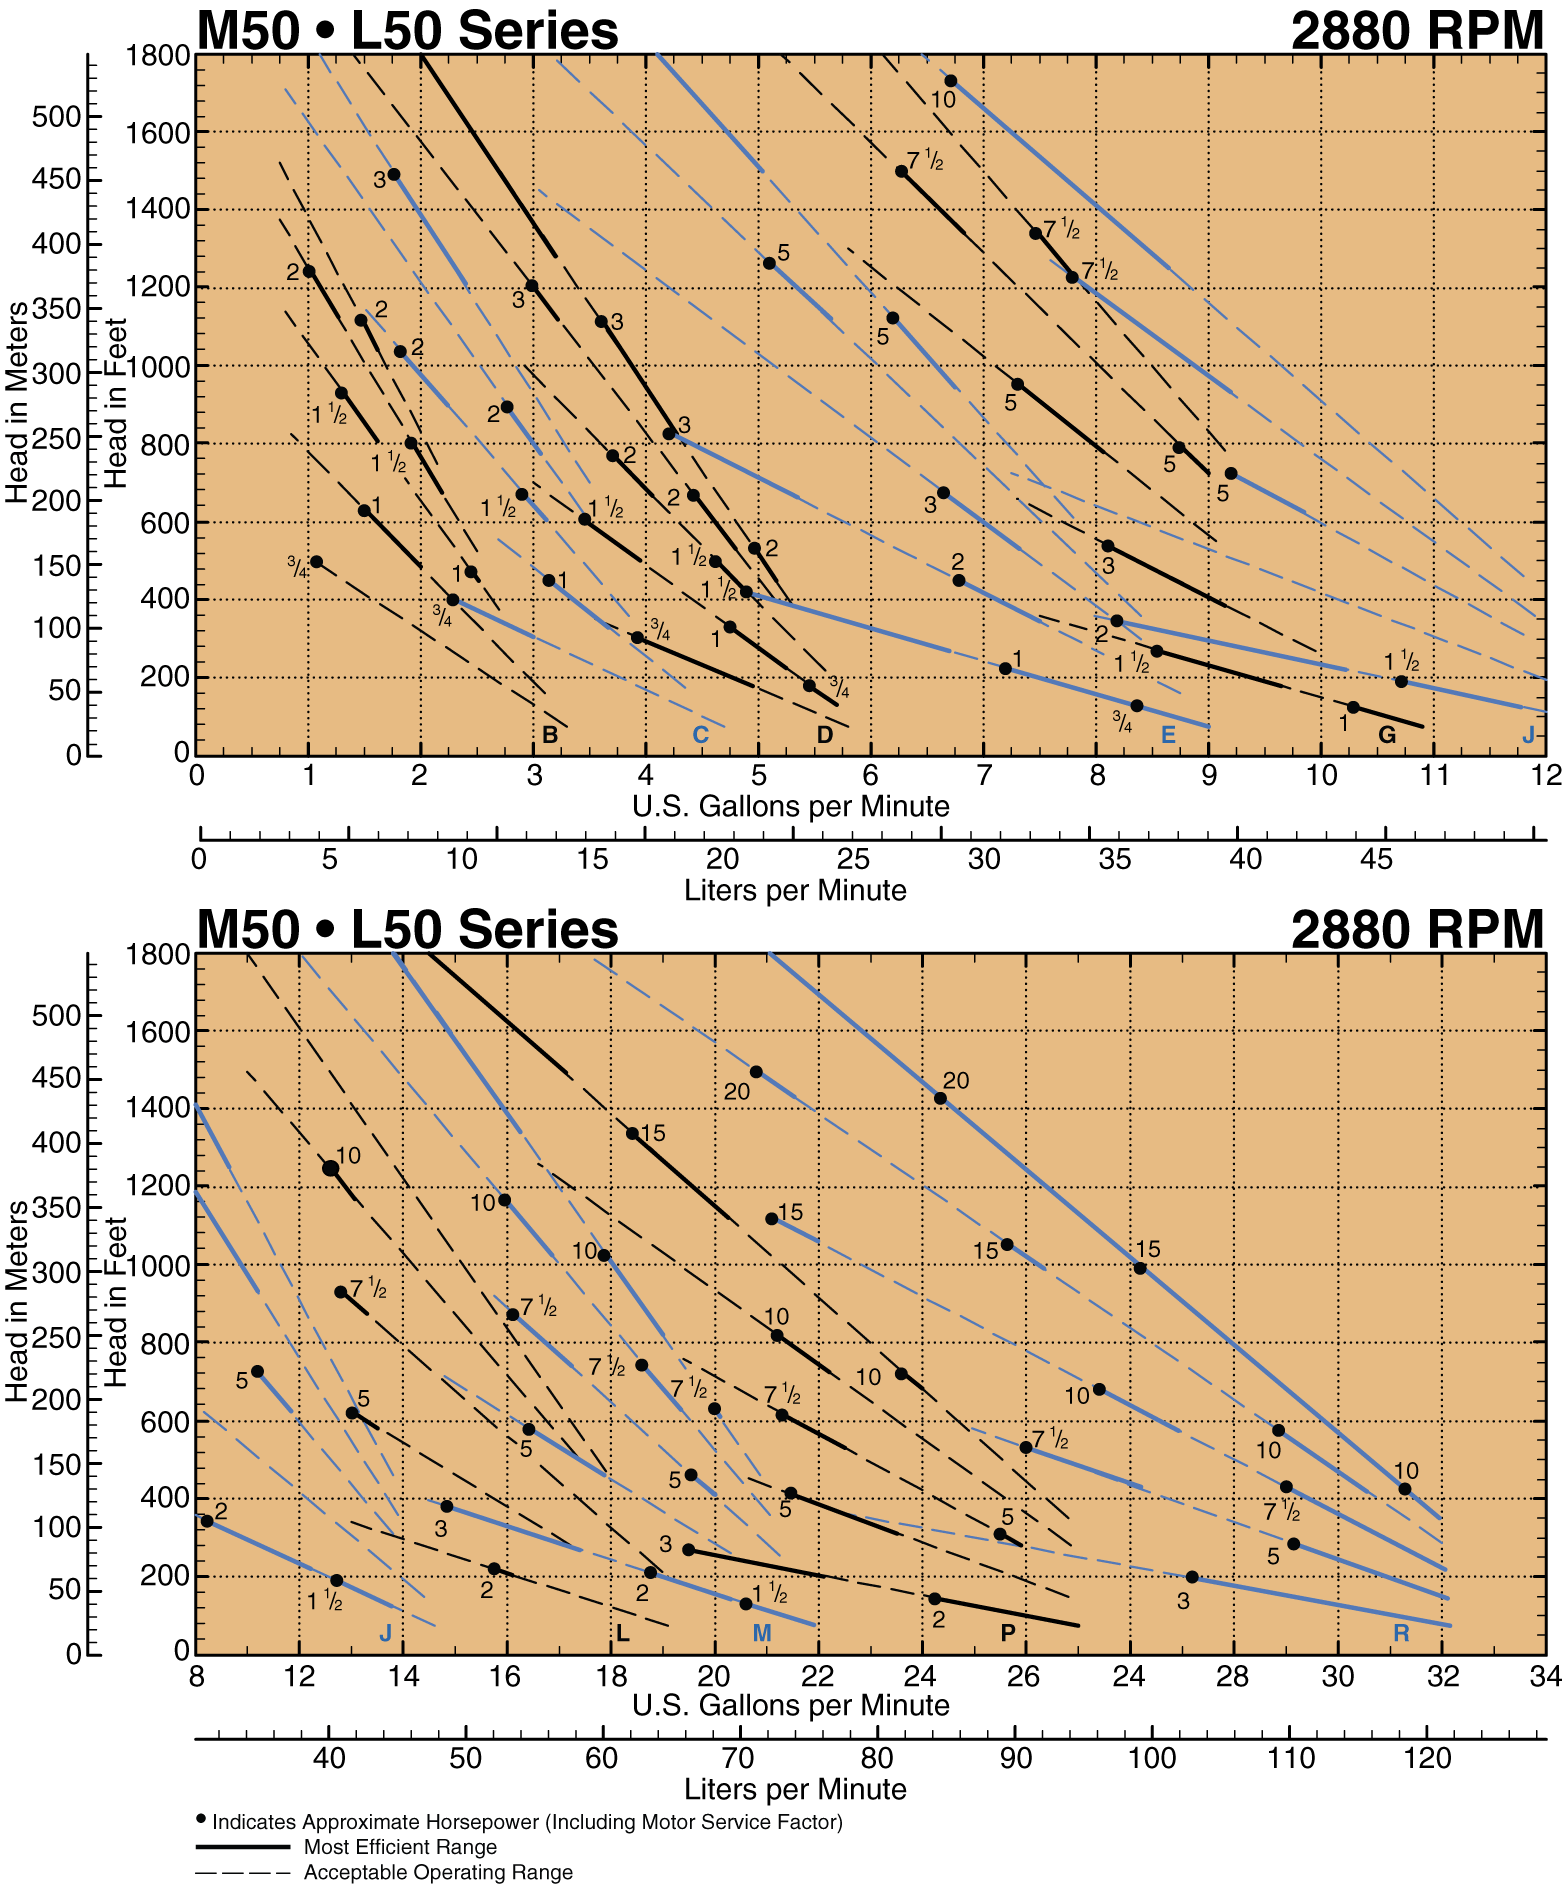 M50-L50 Series Composite Curves: Models B thru J and J thru R at 2880 RPM